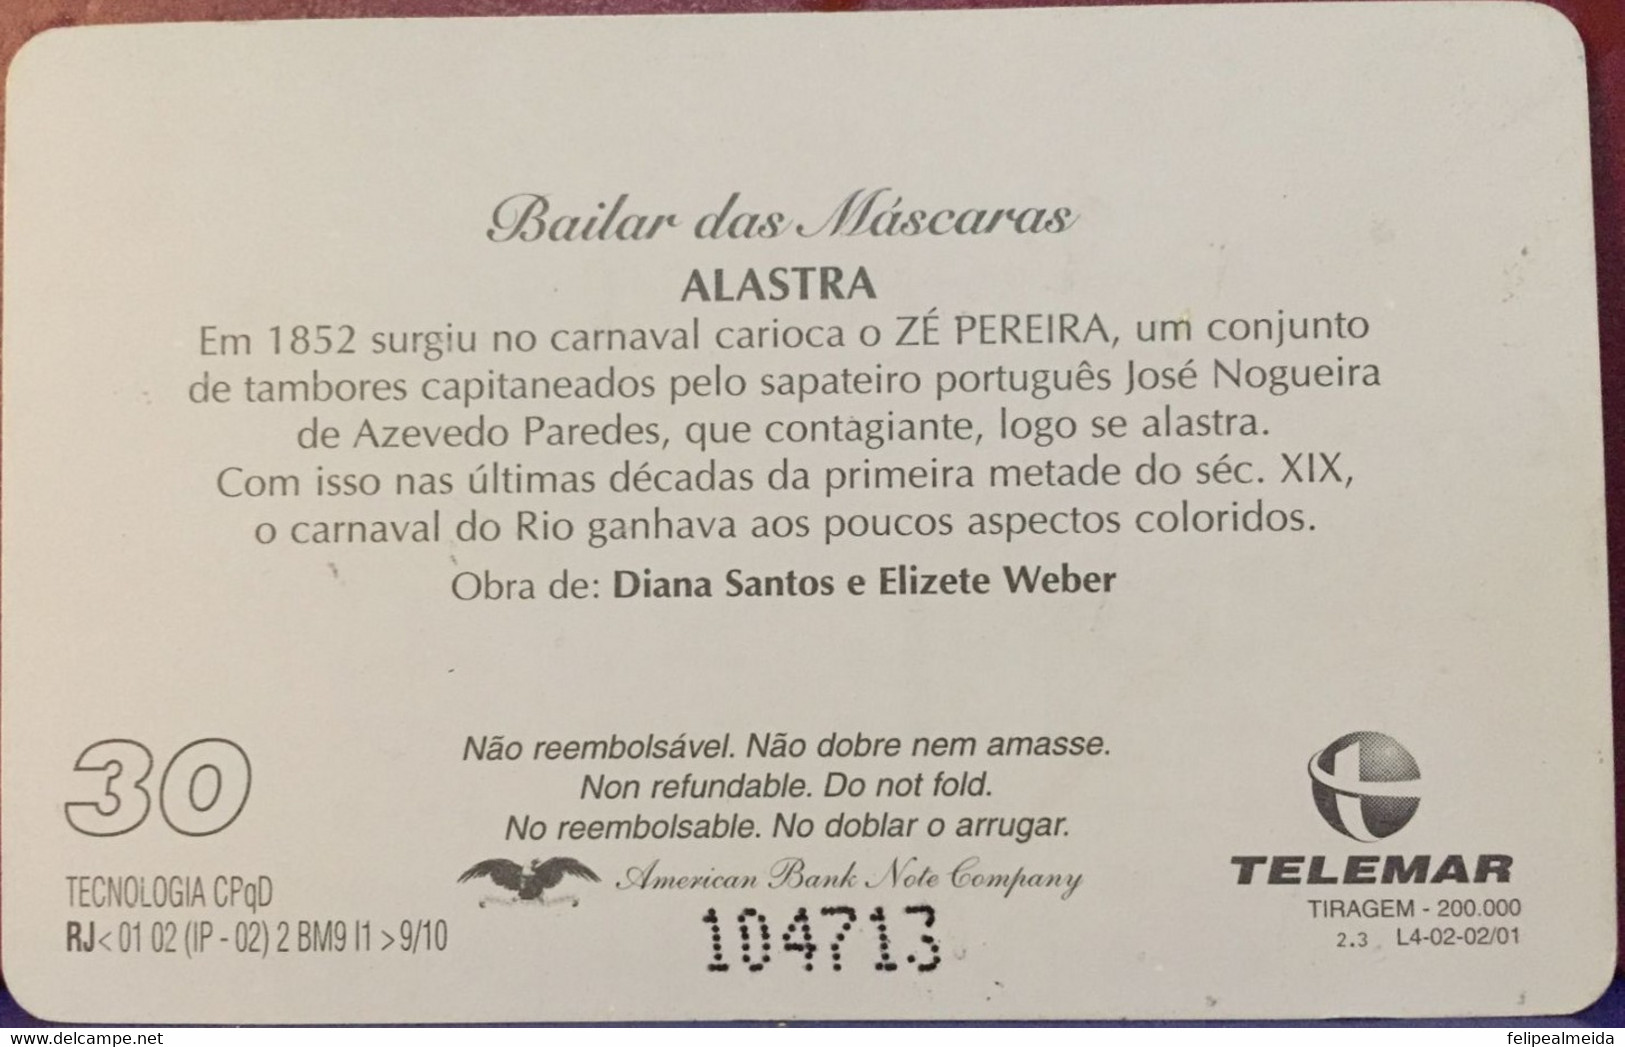 Phone Card Manufactured By Telemar In 2001 - Bailar Das Mascaras - Alastra - Kultur